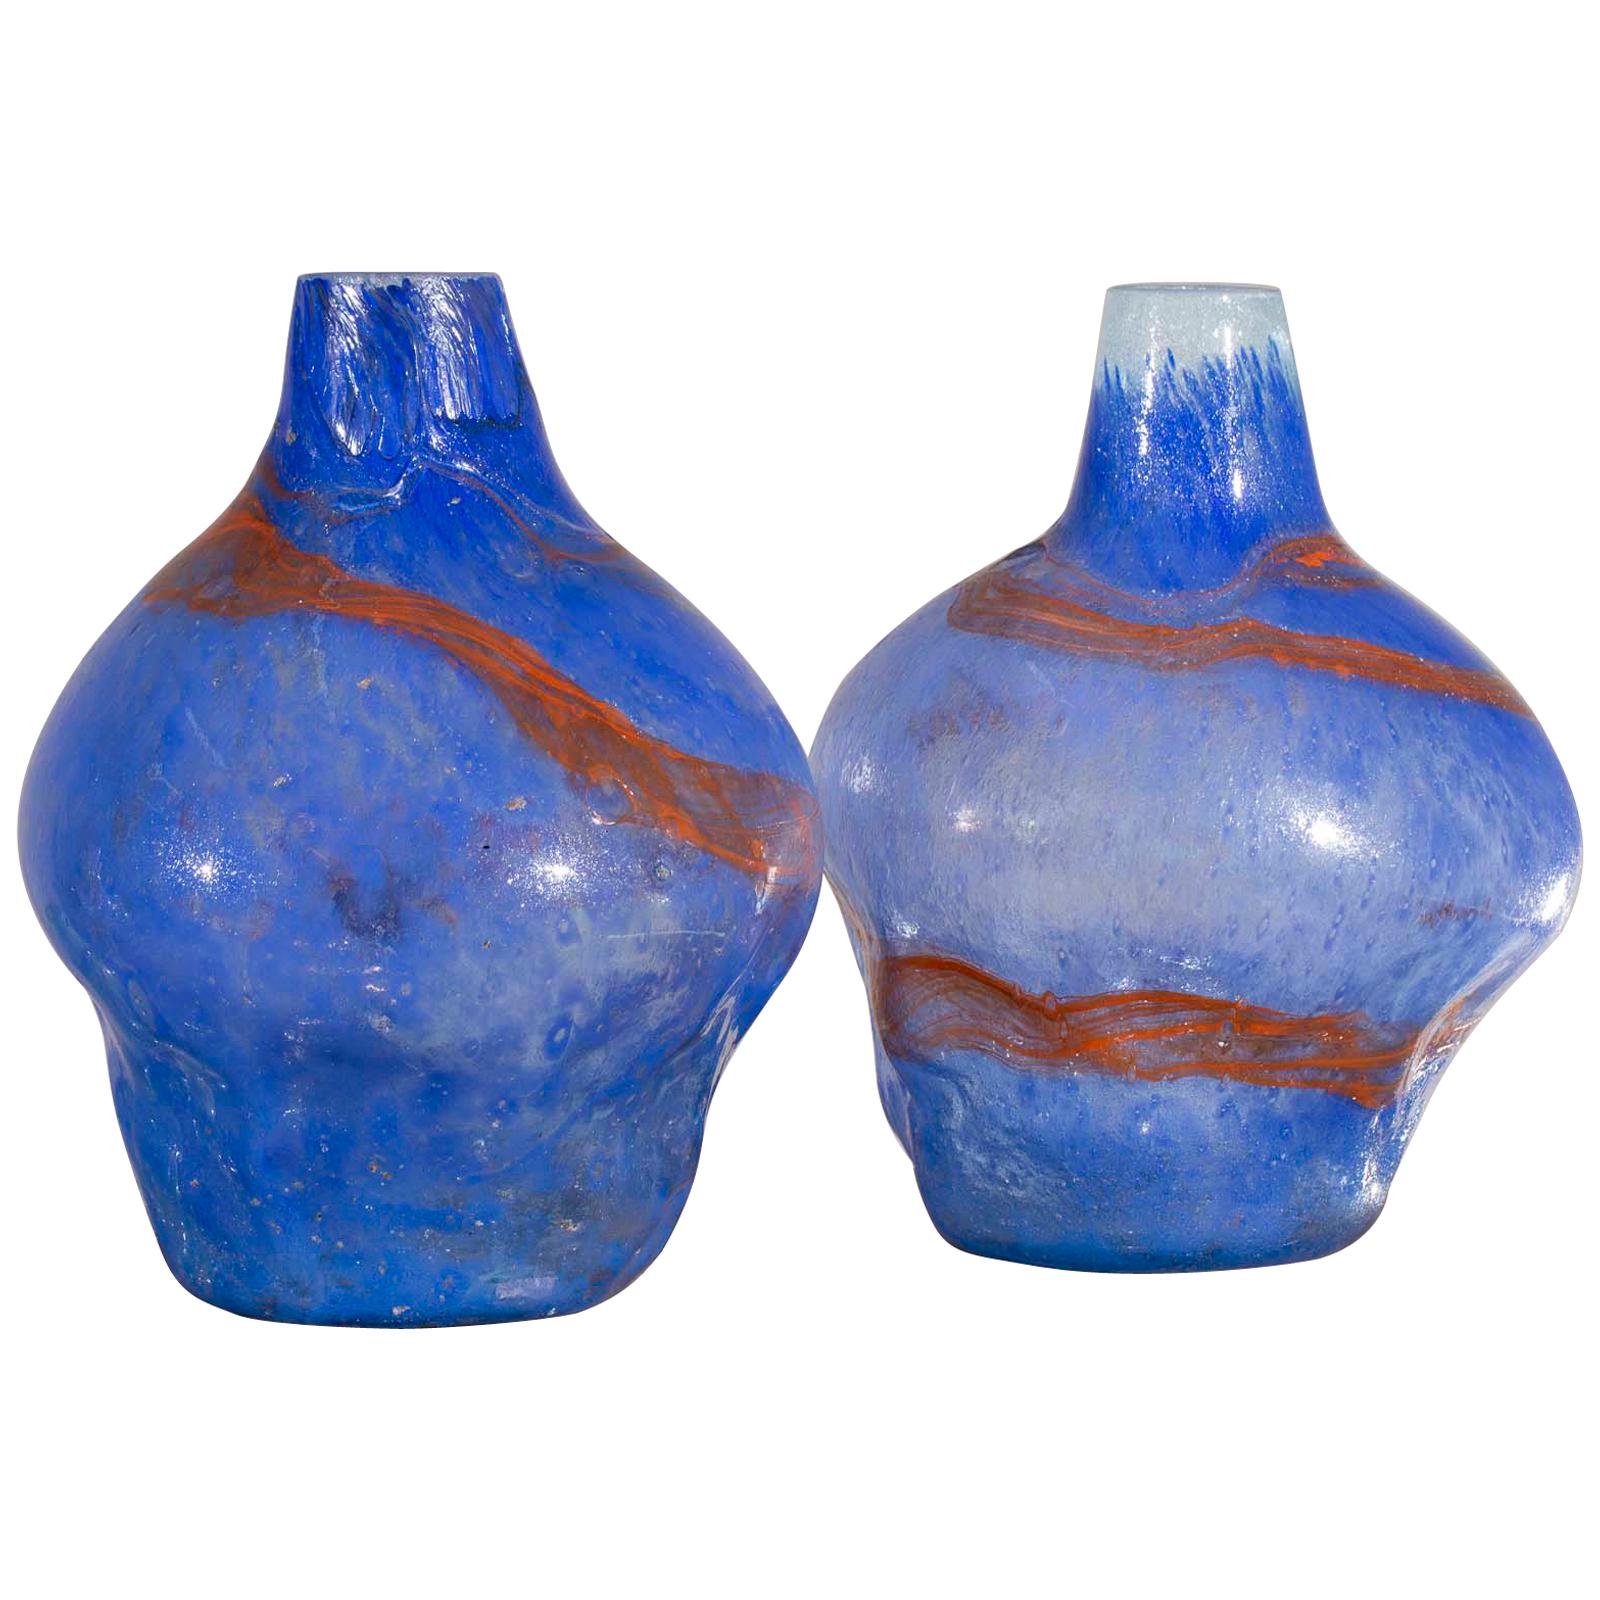 Pair of Modern Blue Orange Handblown Glass Vases from Holland